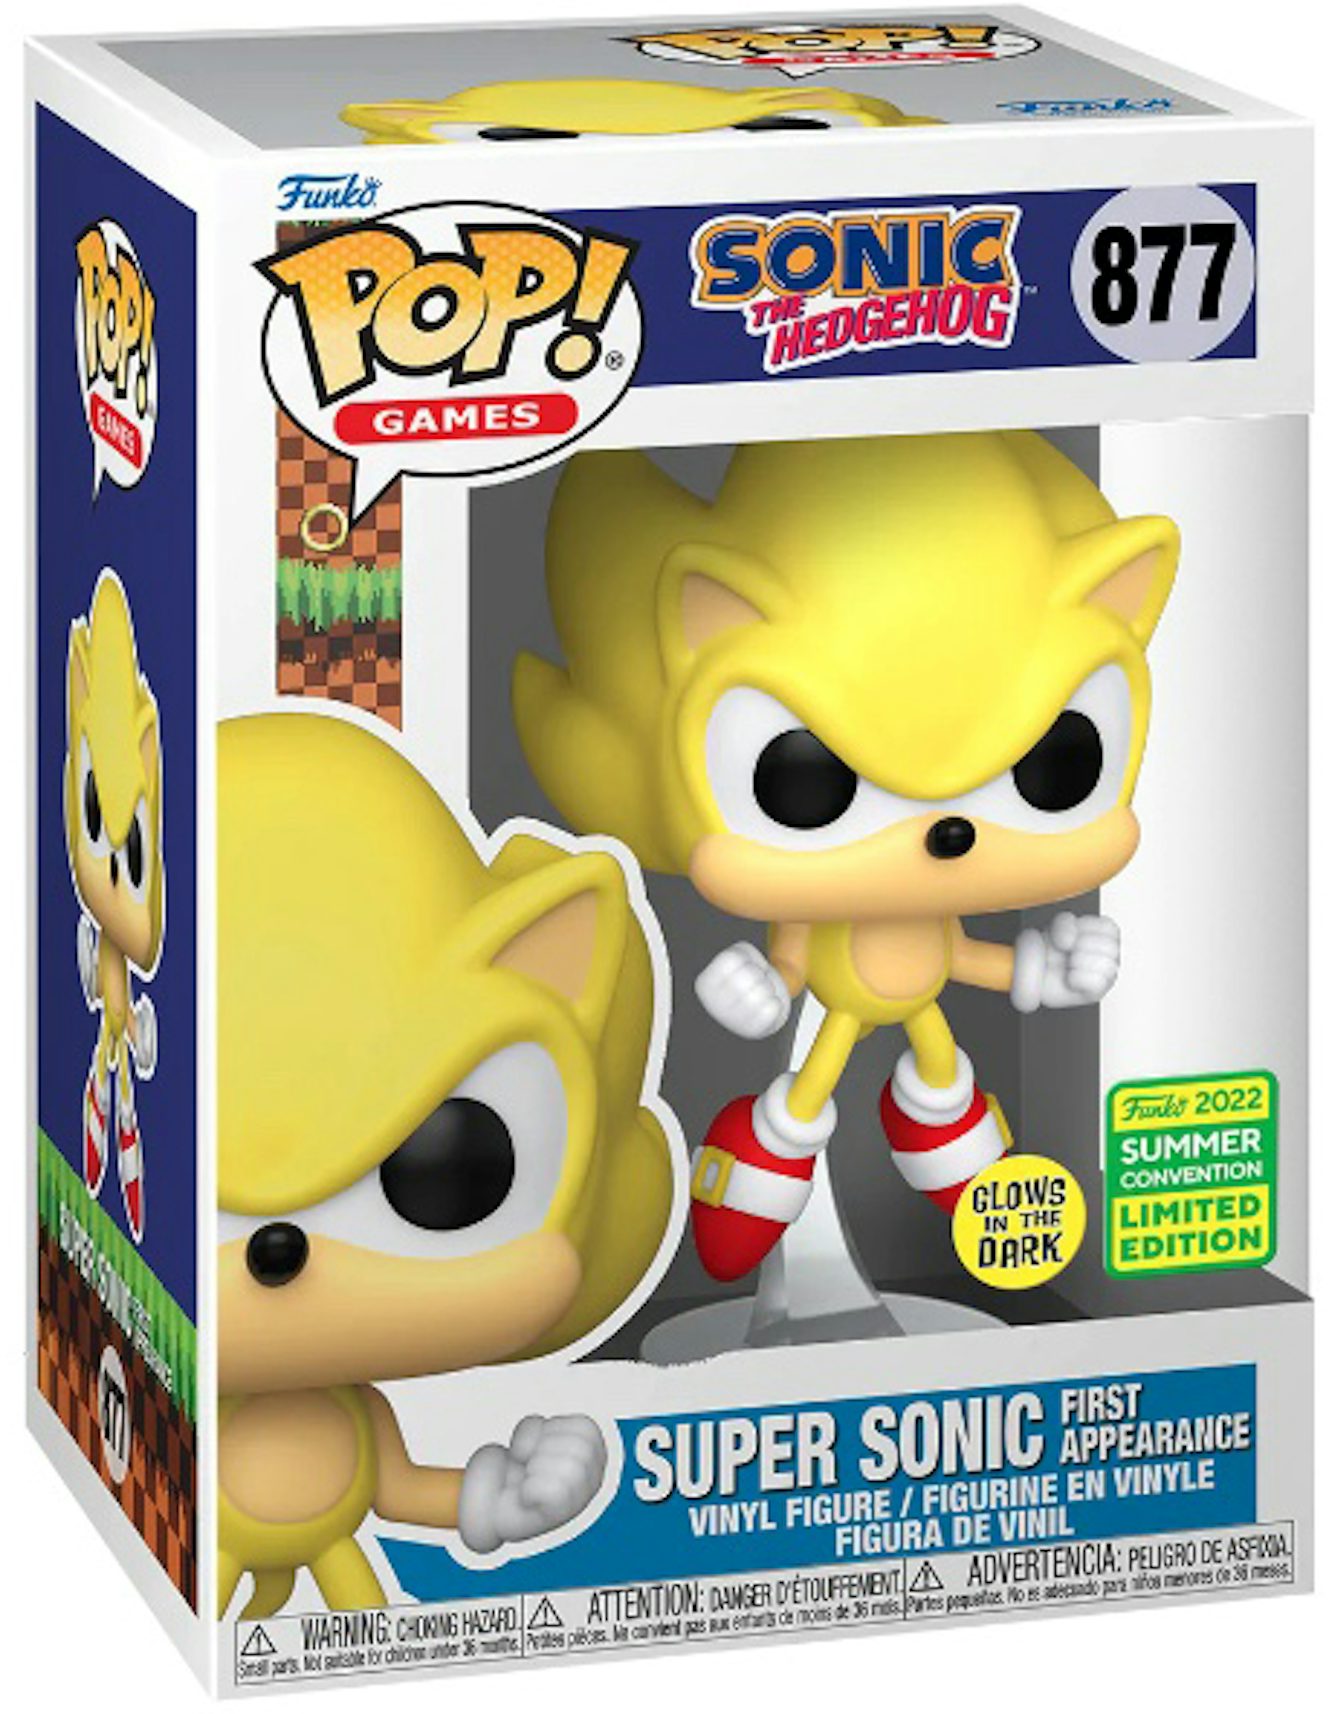 Funko Pop Sonic Clássico 632 Sonic The Hedgehog